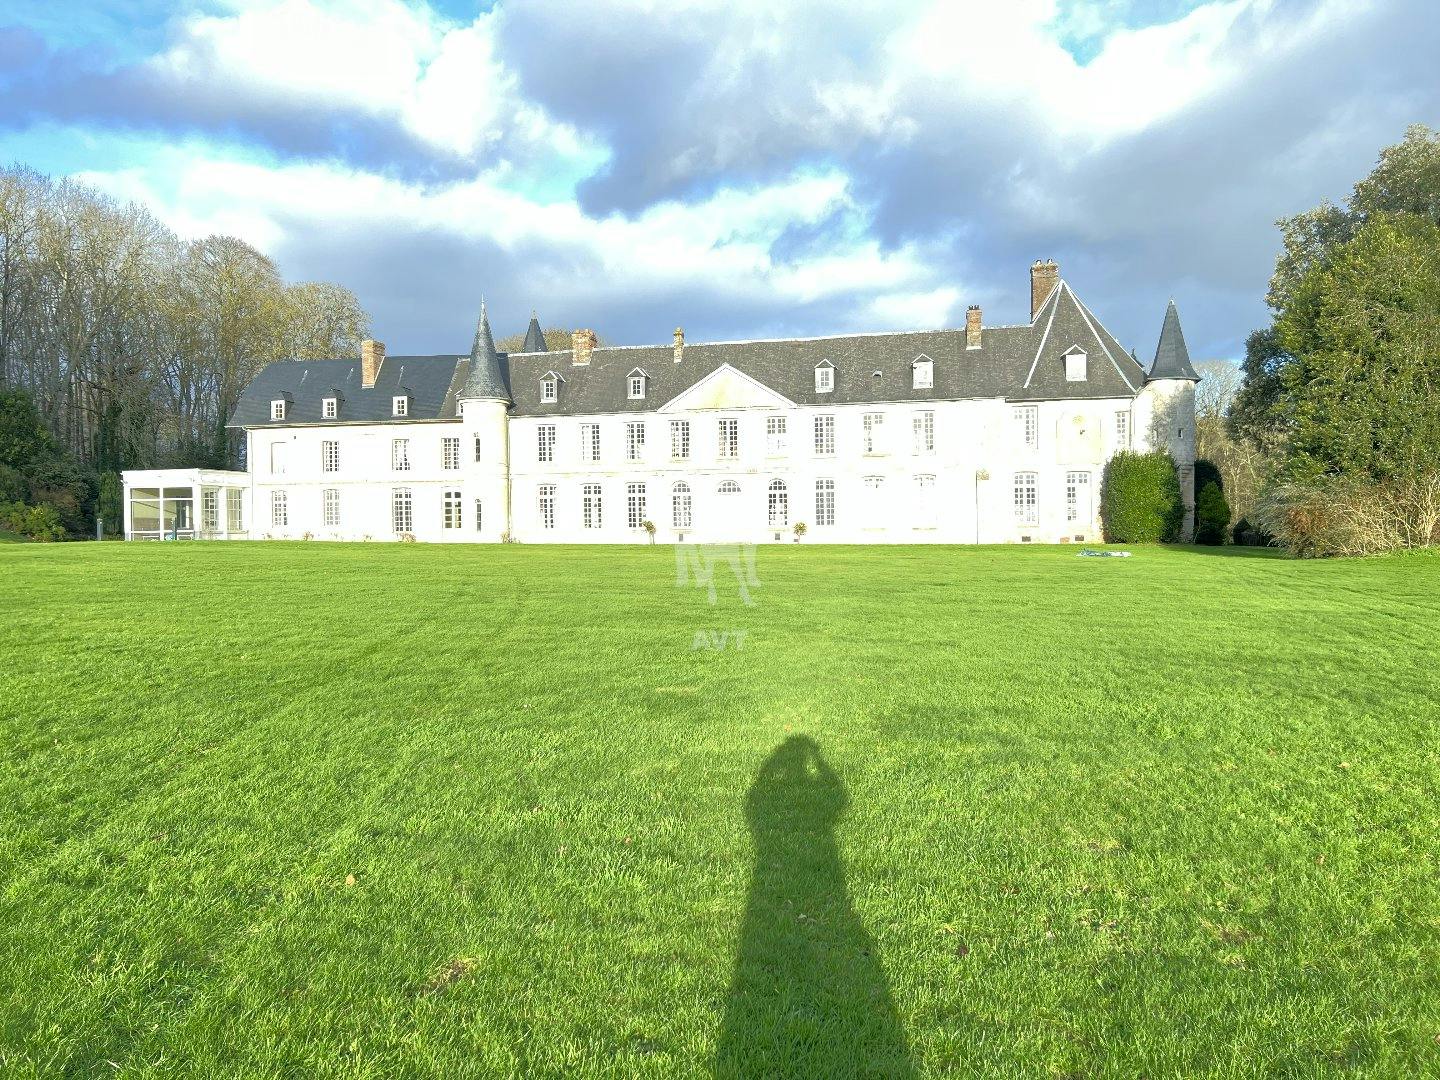 A vendre ,  Bourg - Achard ( Eure ) , chateau  ,  1140 m2 habitables , 28 pièces , 16 chambres , terrain 40 hectares